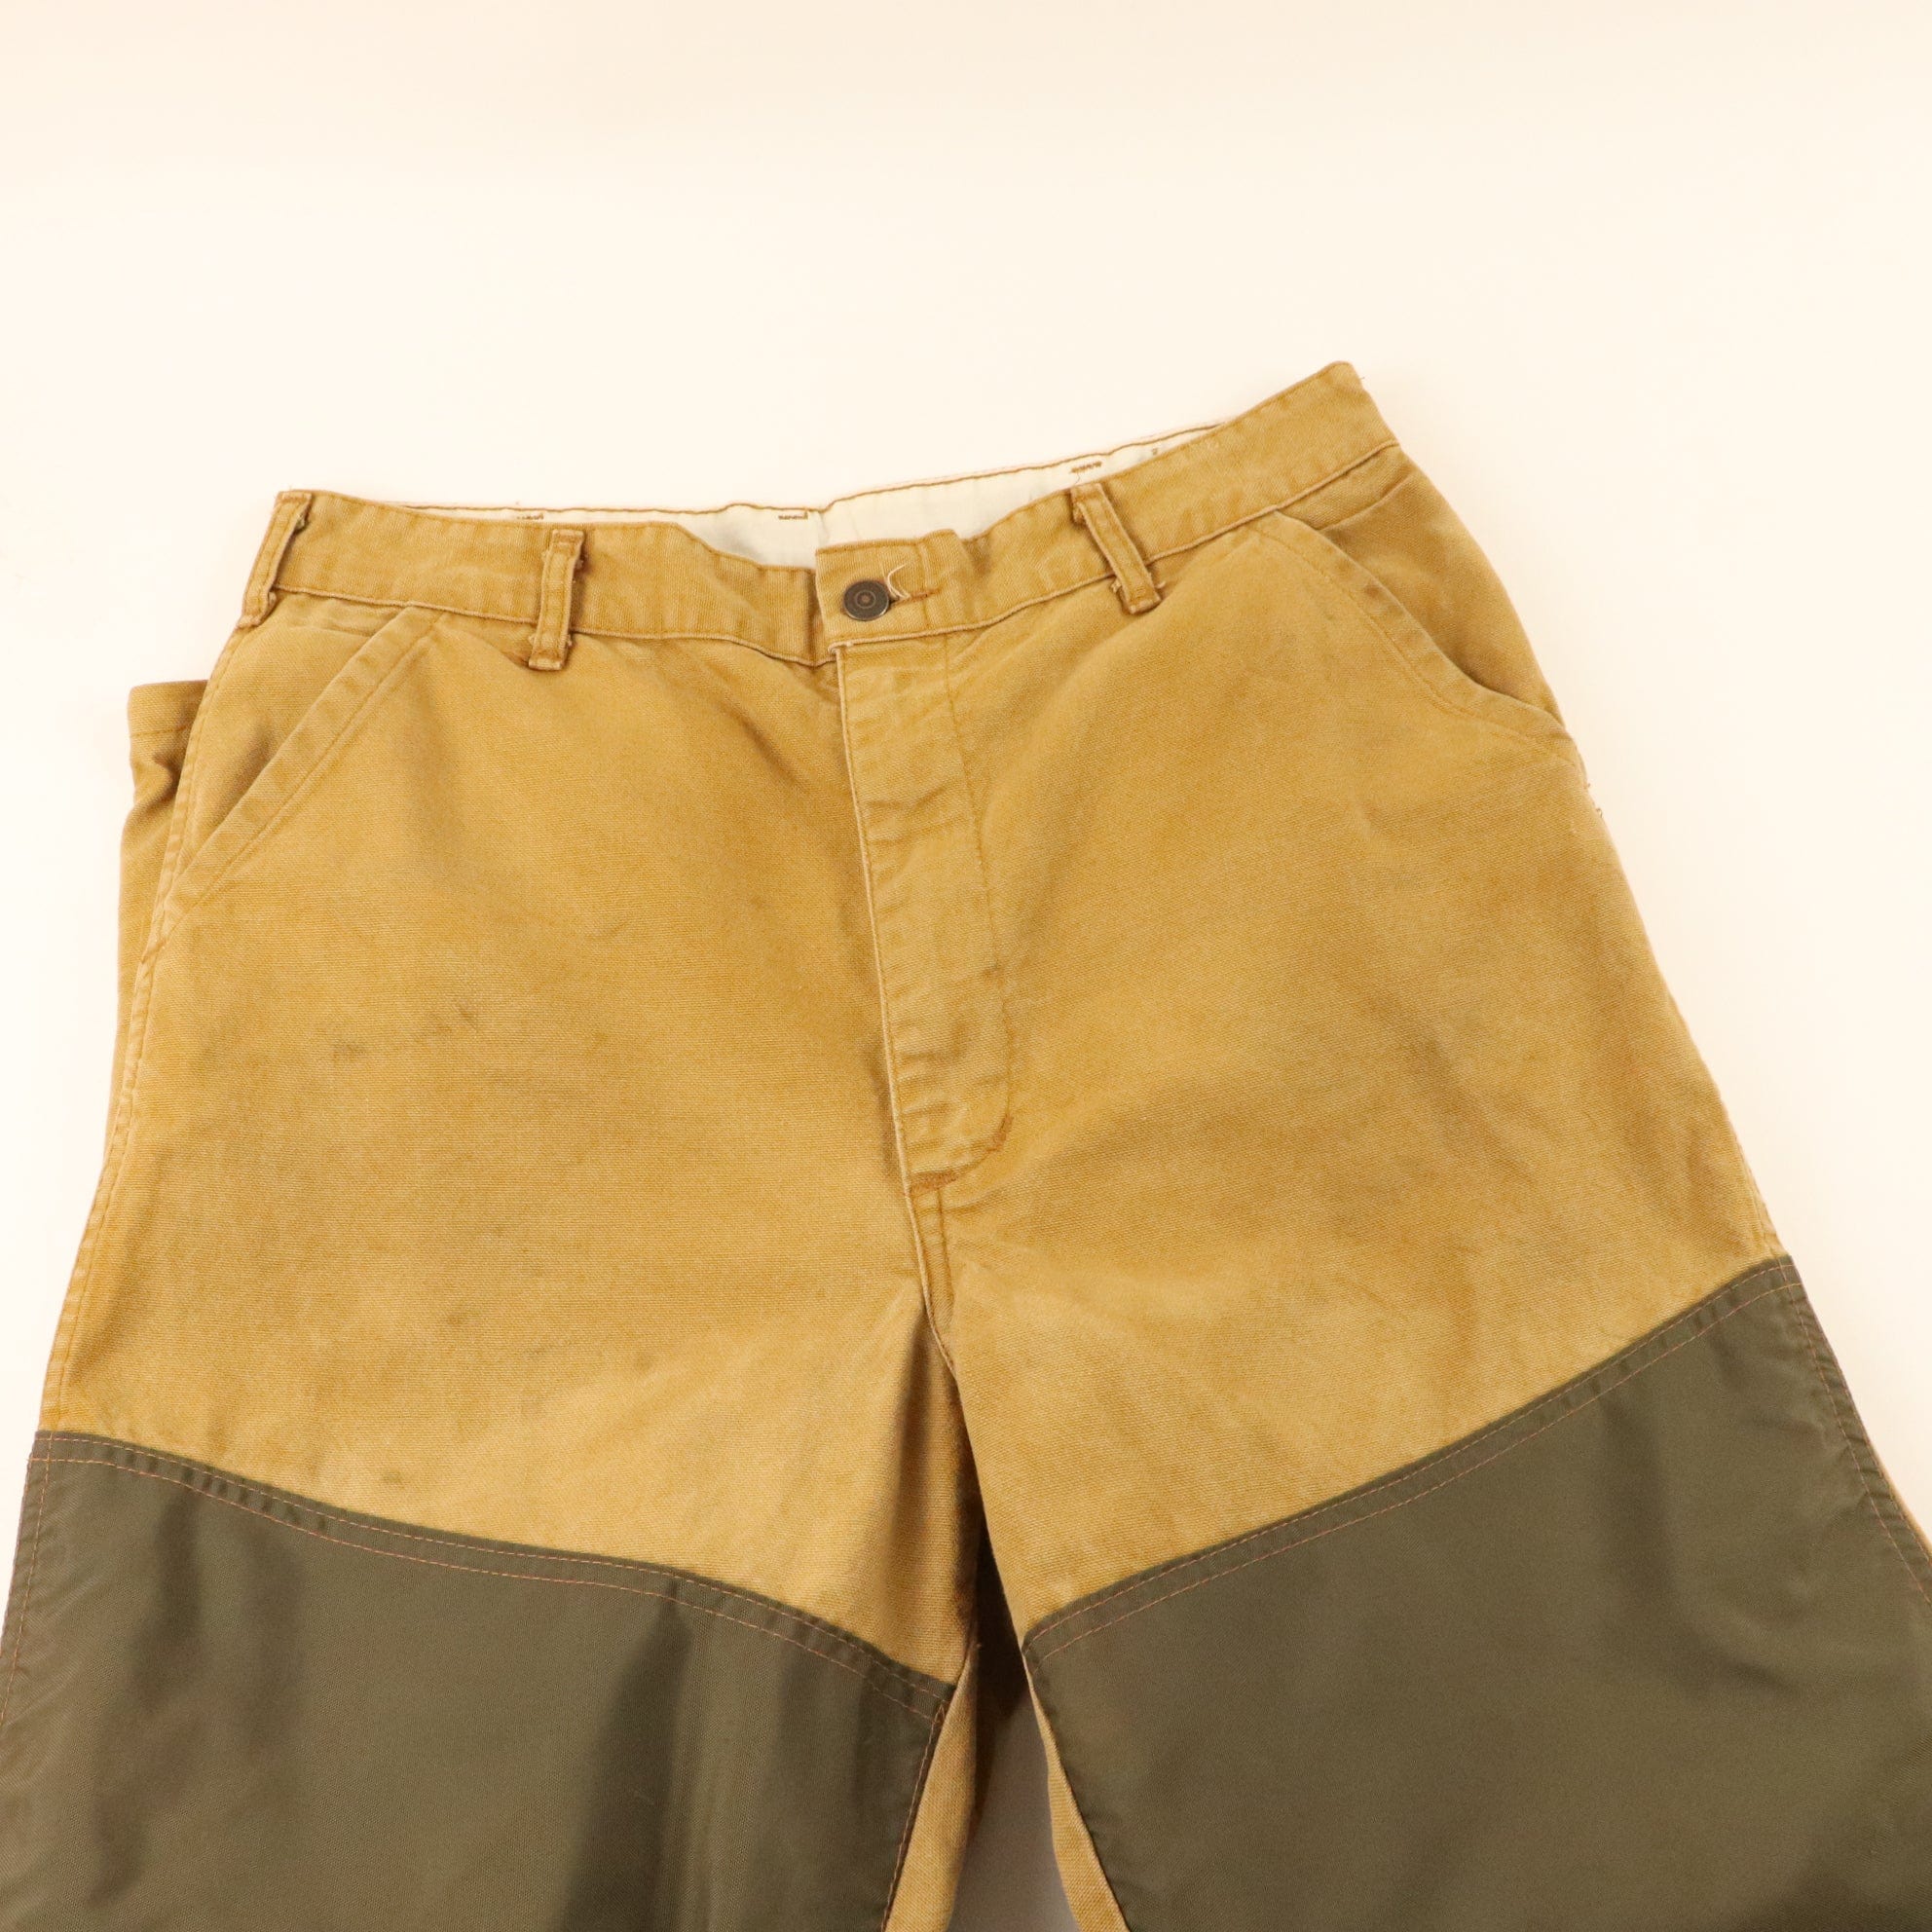 Vintage Saftbak Hunting Pants Size 34 x 31